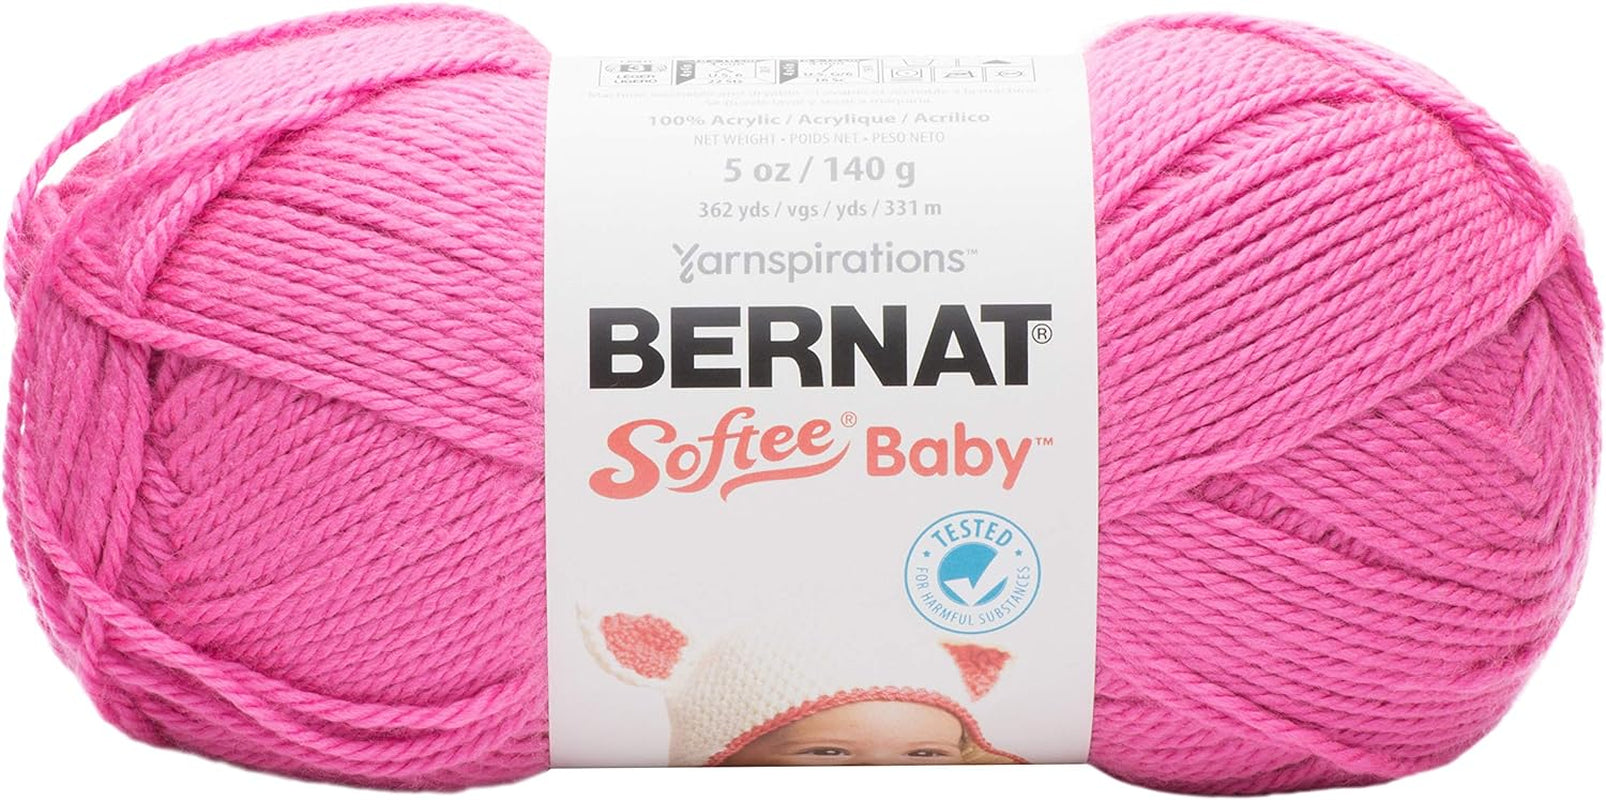 Softee Baby White Yarn - 3 Pack of 141G/5Oz - Acrylic - 3 DK (Light) - 362 Yards - Knitting/Crochet